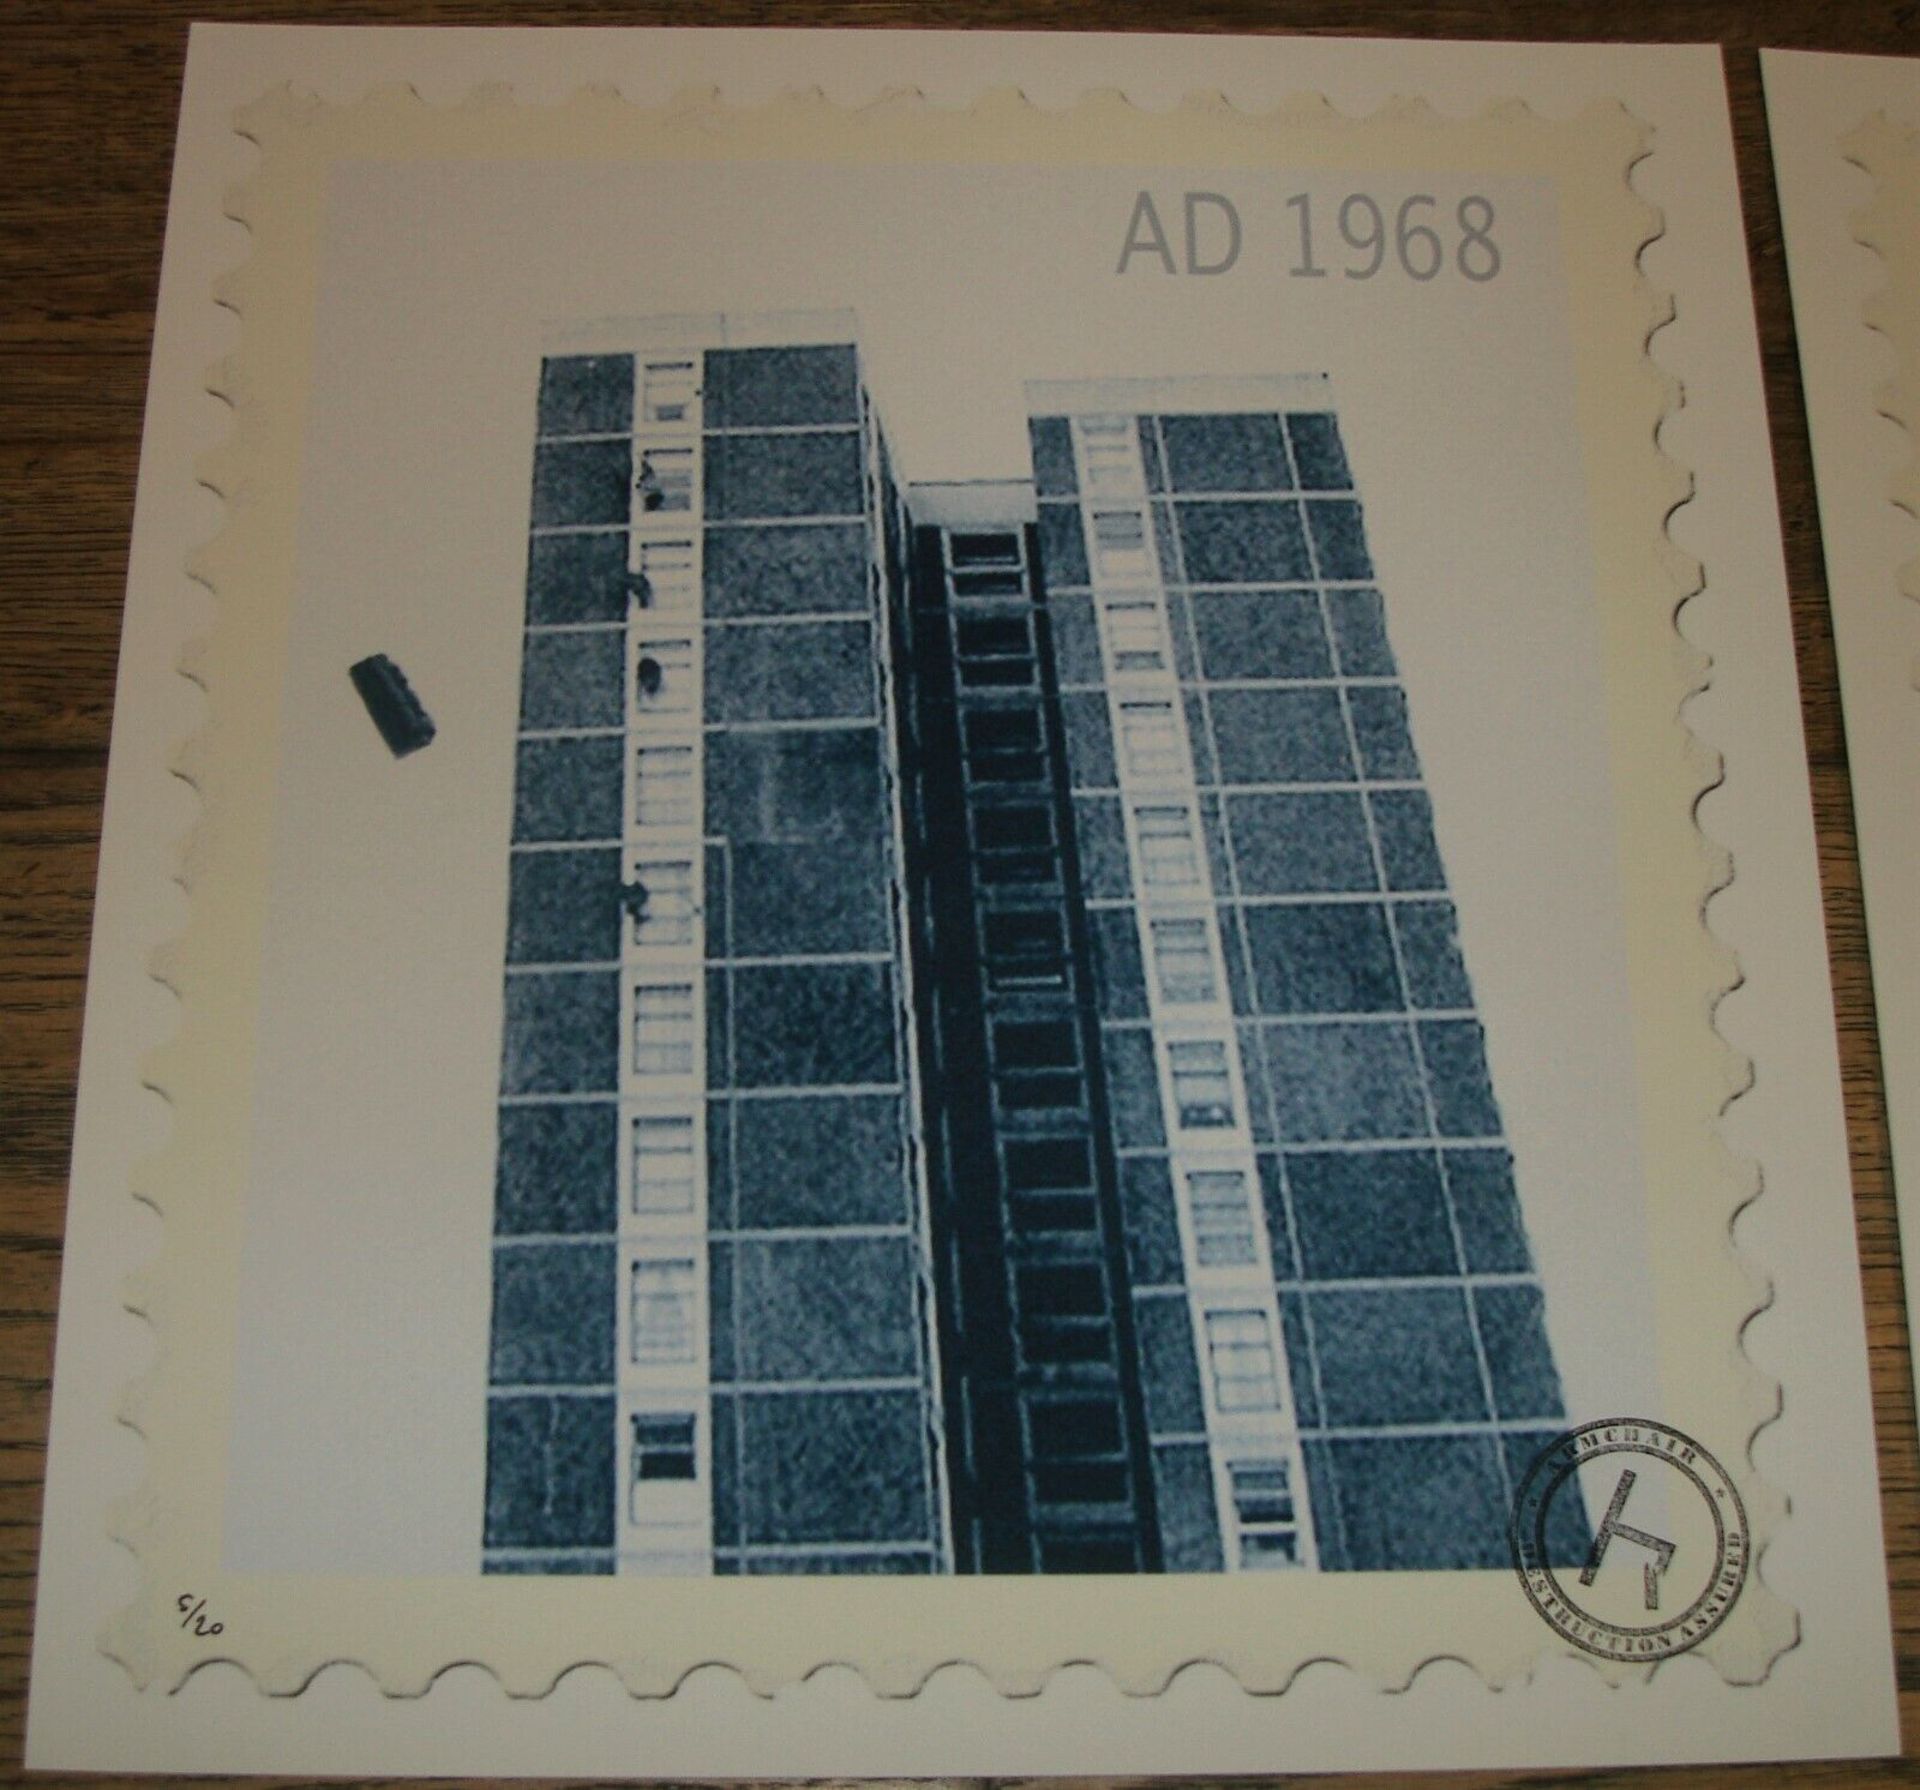 James Cauty (1956 - ) Armchair Destructivists - AD1968abc - Set of 3 Pop Editions (2007) - Image 4 of 9